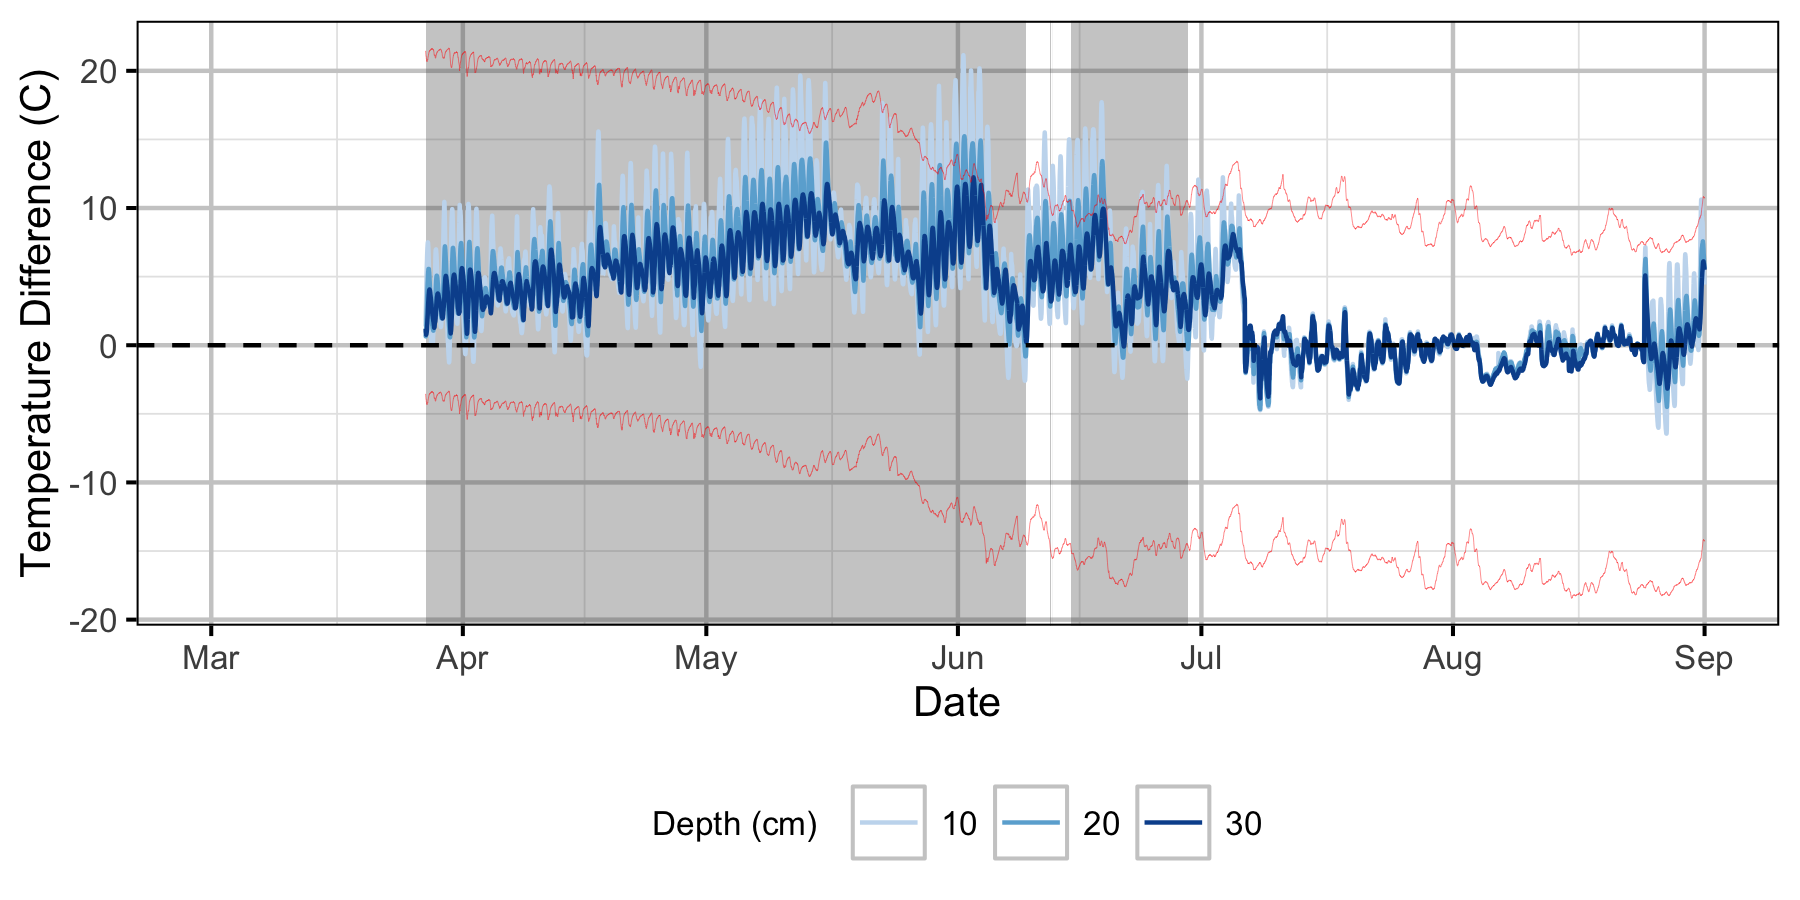 figures/Sensor Data/Relative Gravel Temperature Stations/Norns Creek Fan/Station09.png